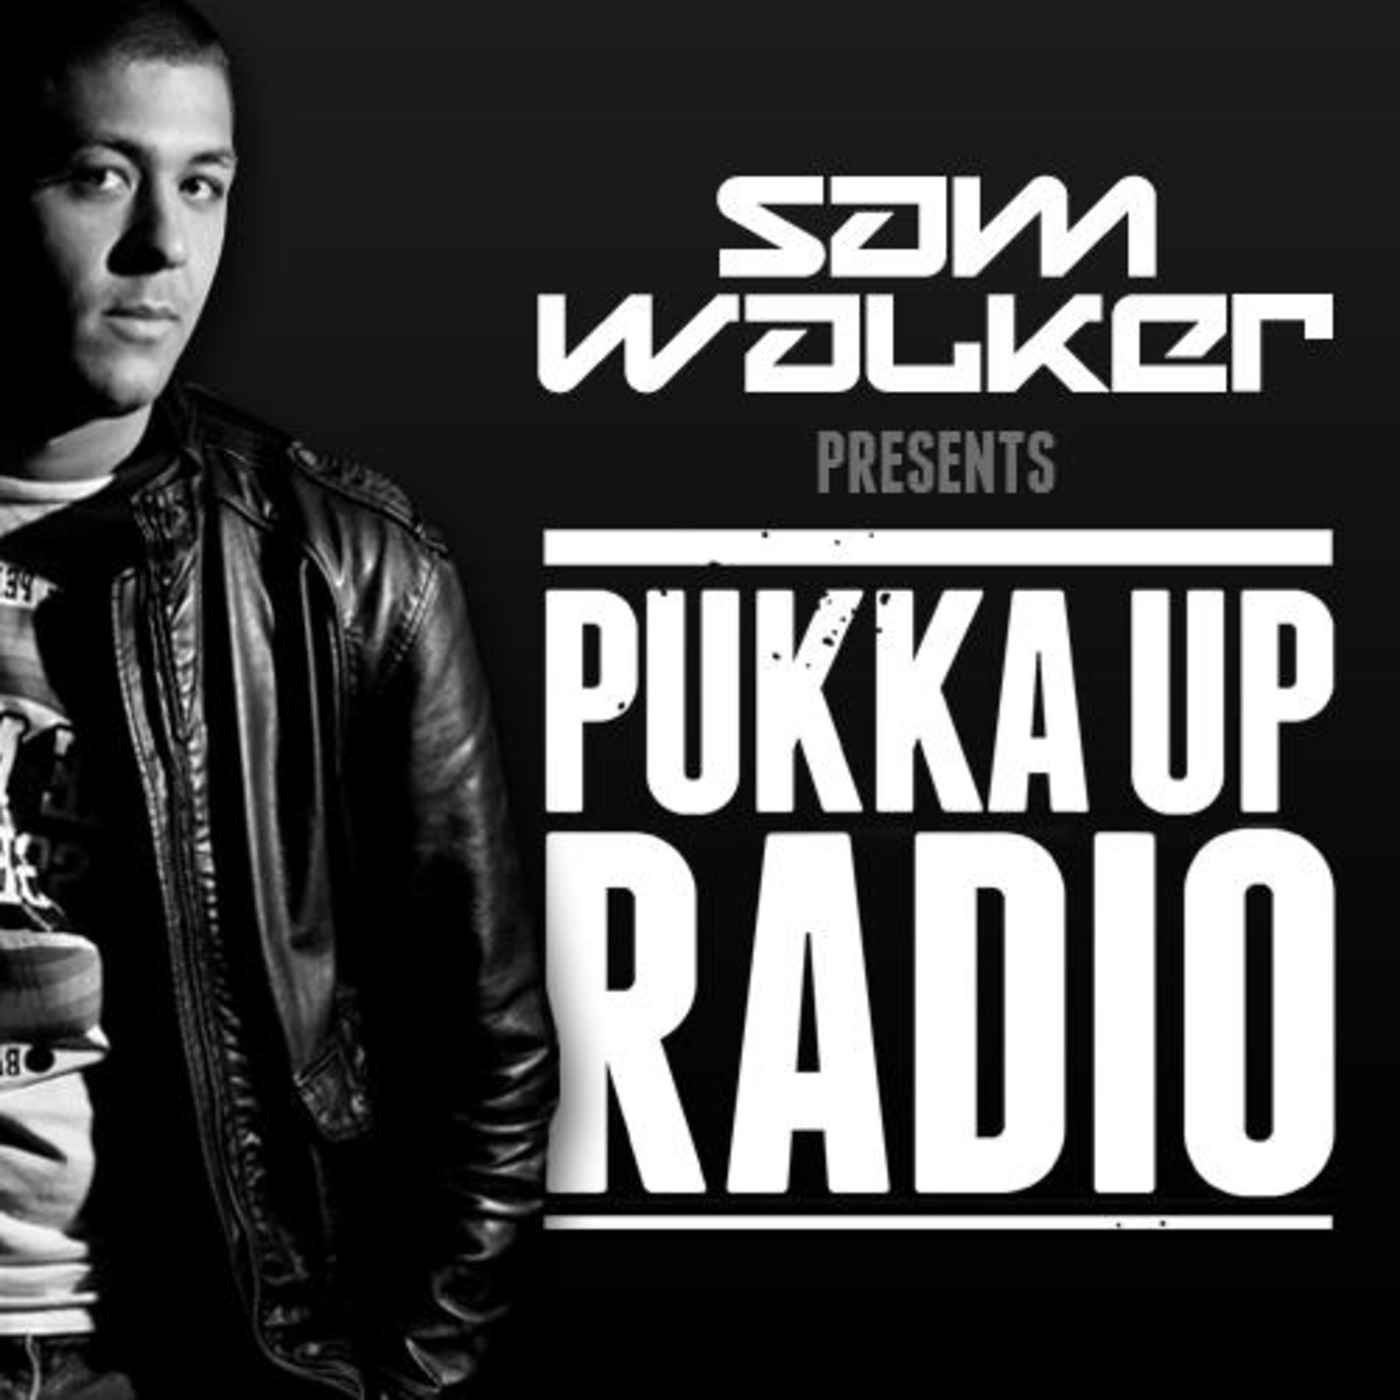 053 SAM WALKER presents PUKKA UP RADIO